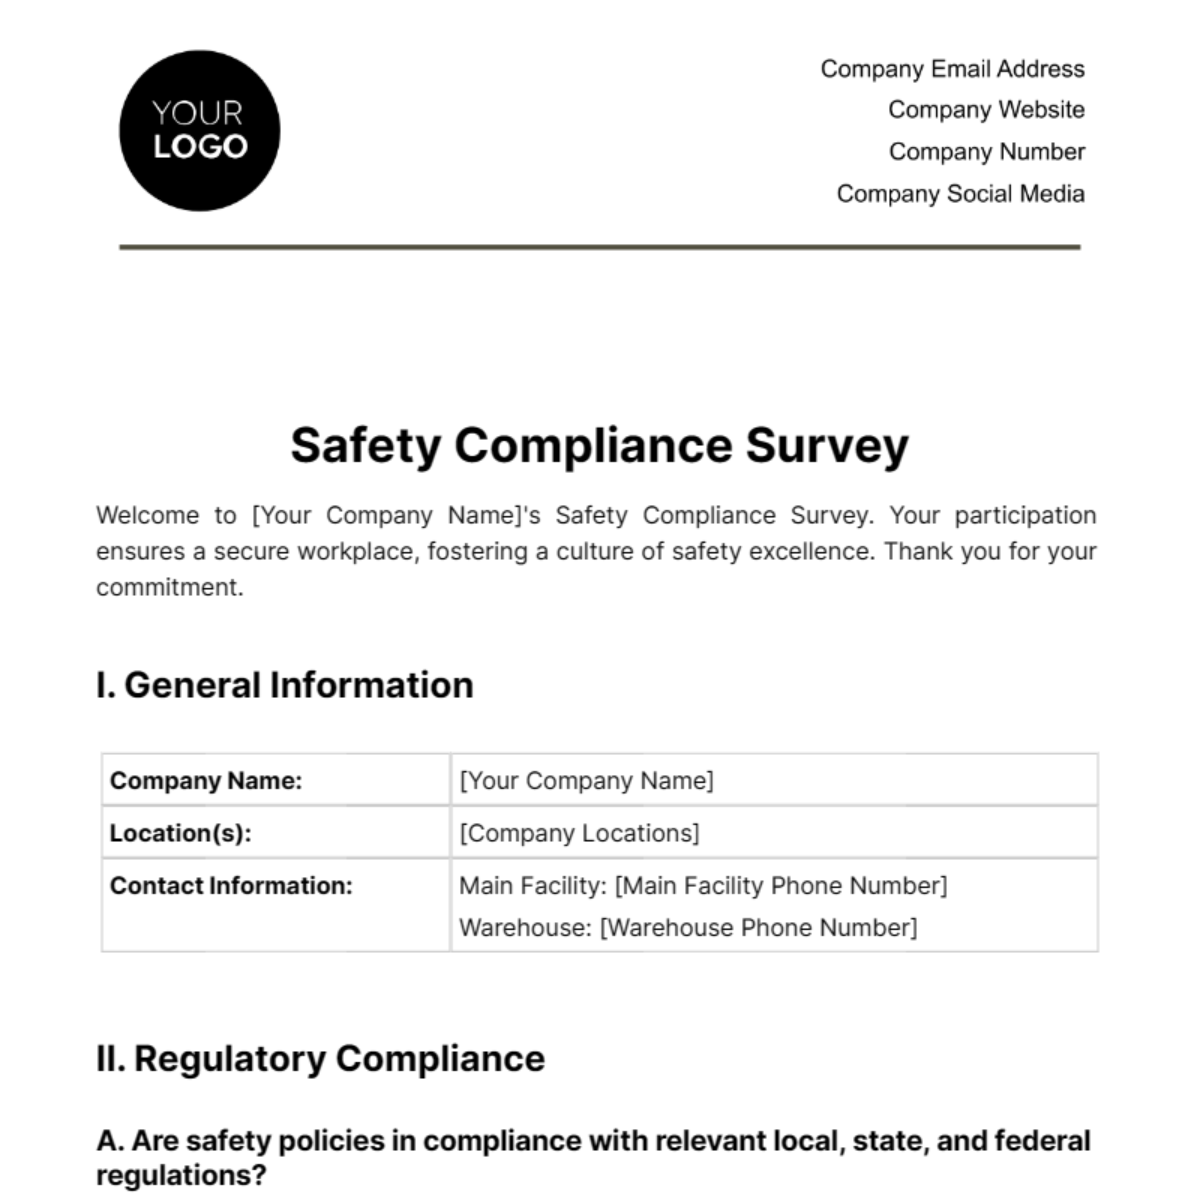 Safety Compliance Survey Template